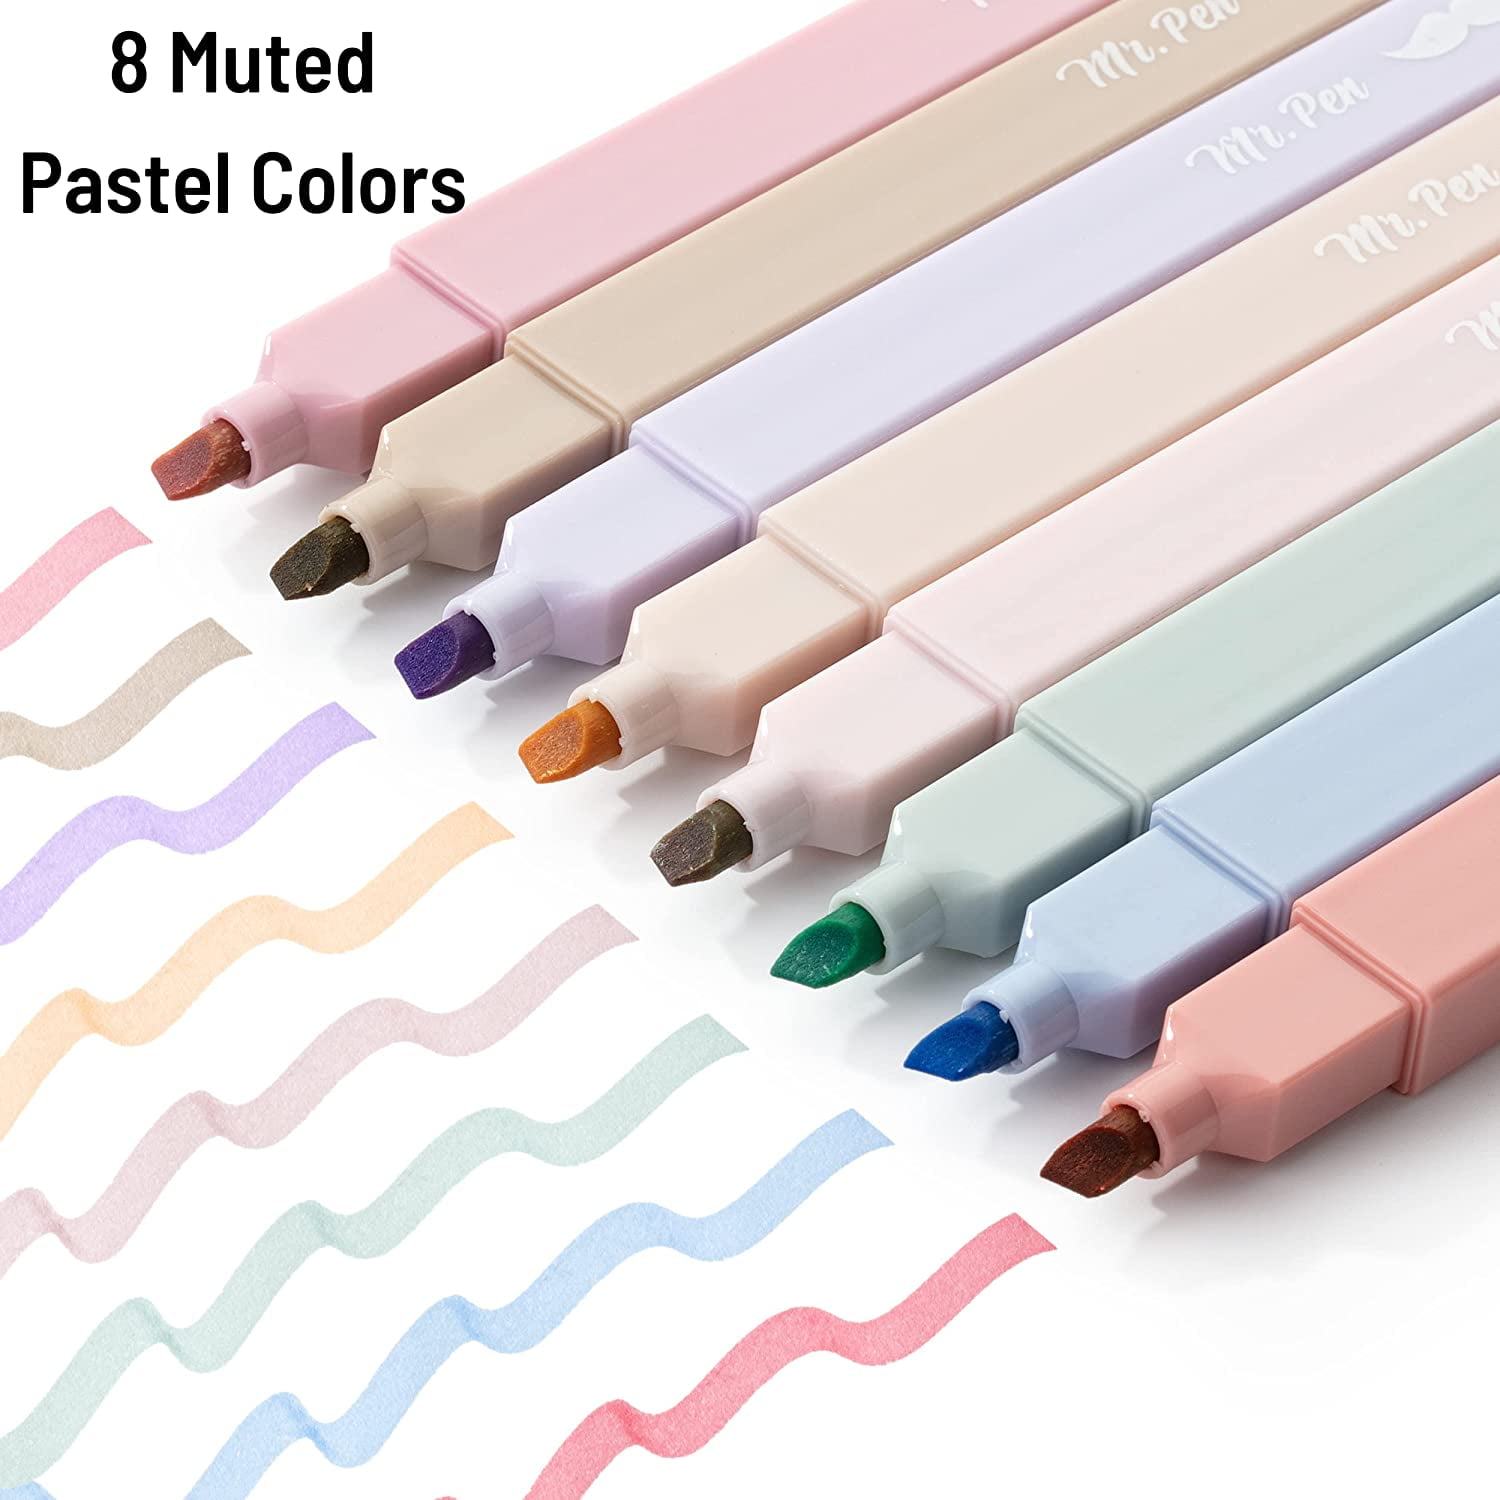 Mr. Pen- Metallic Markers, 8 Pcs, Assorted Colors, Metallic